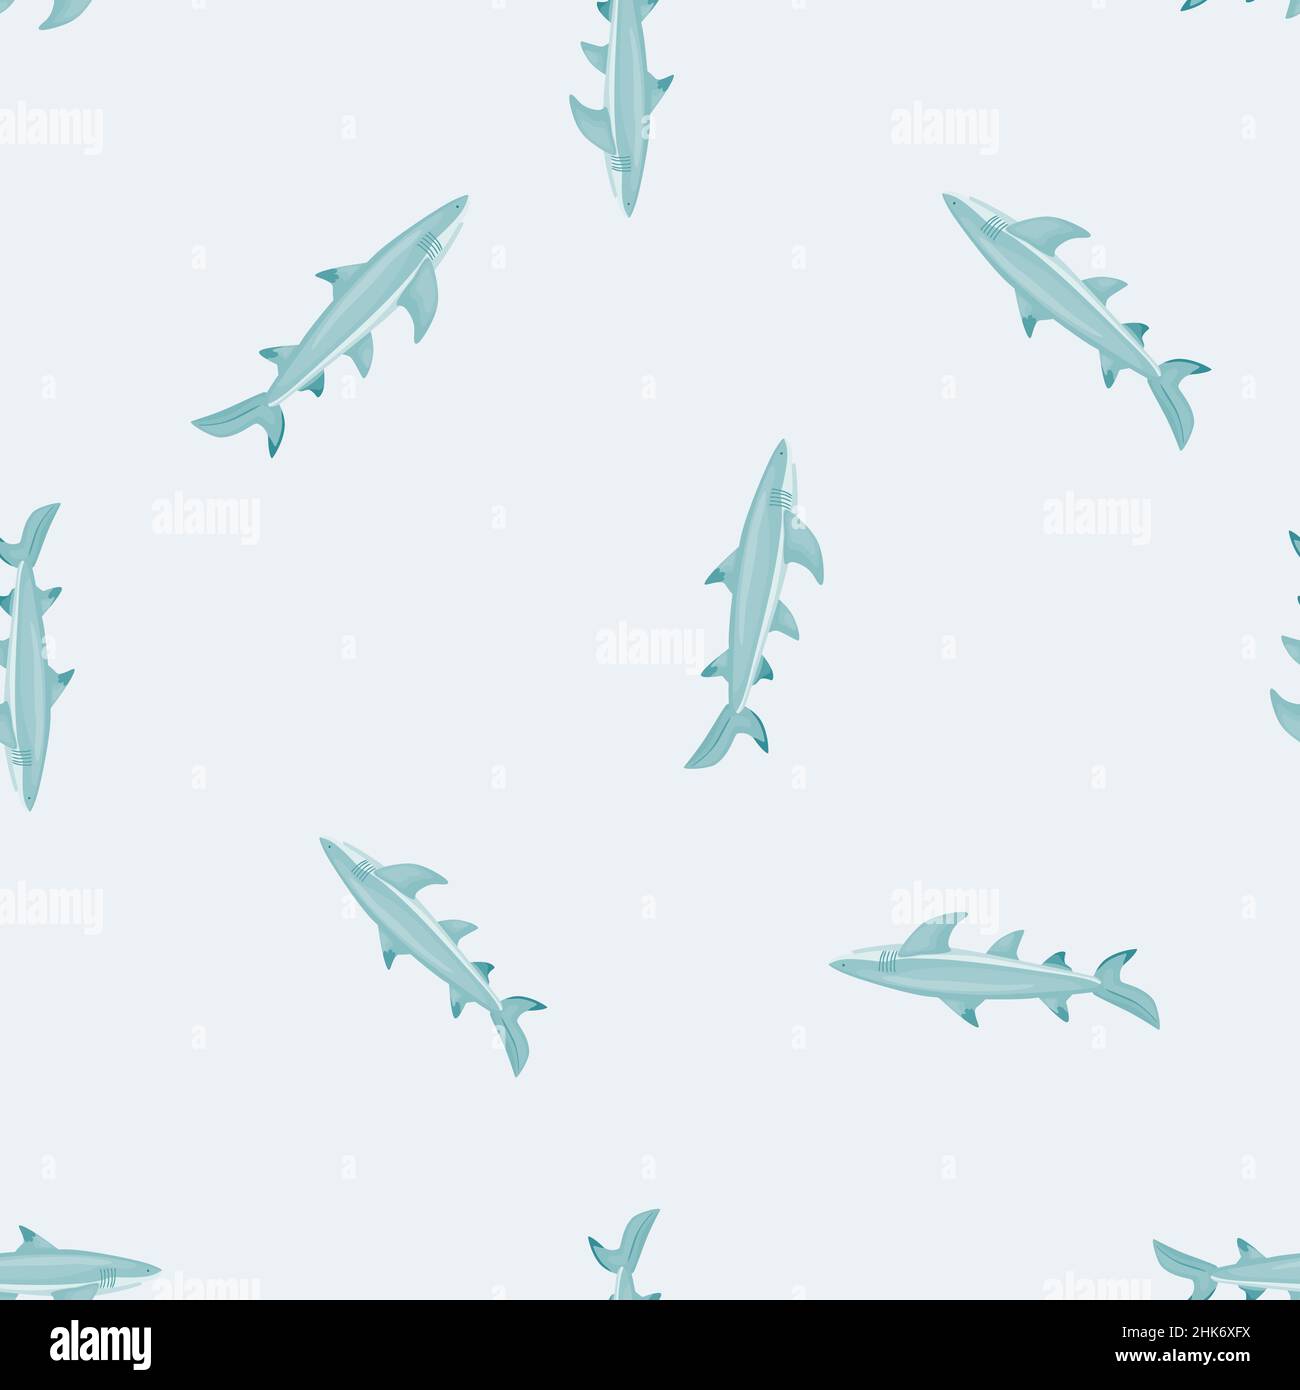 Lemon shark seamless pattern in scandinavian style. Marine animals background. Vector illustration for children funny textile prints, fabric, banners, Stock Vector